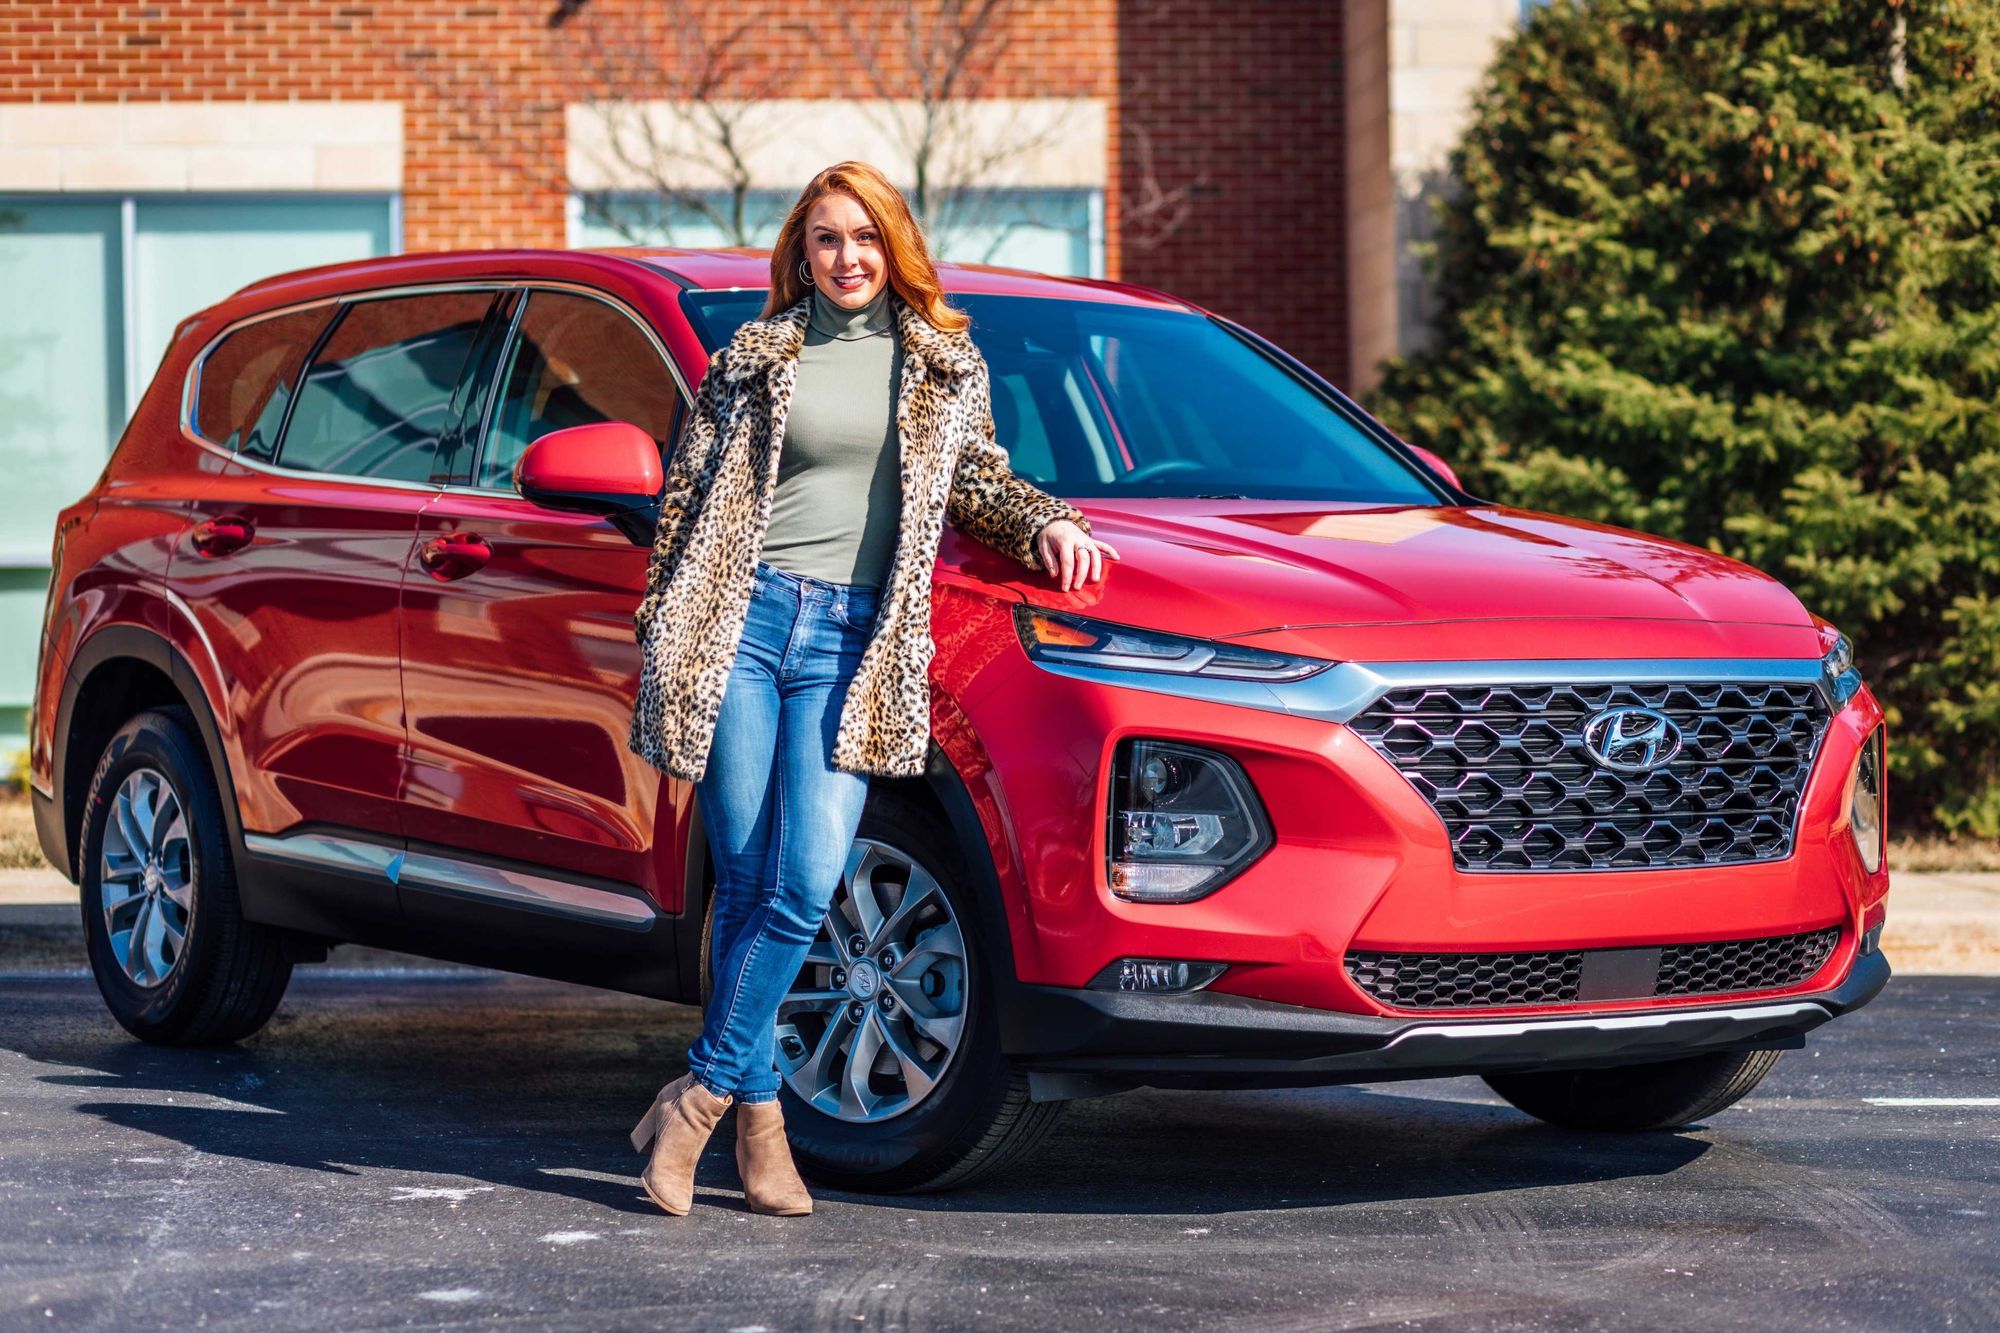 Mujer pelirroja junto a un Hyundai rojo.